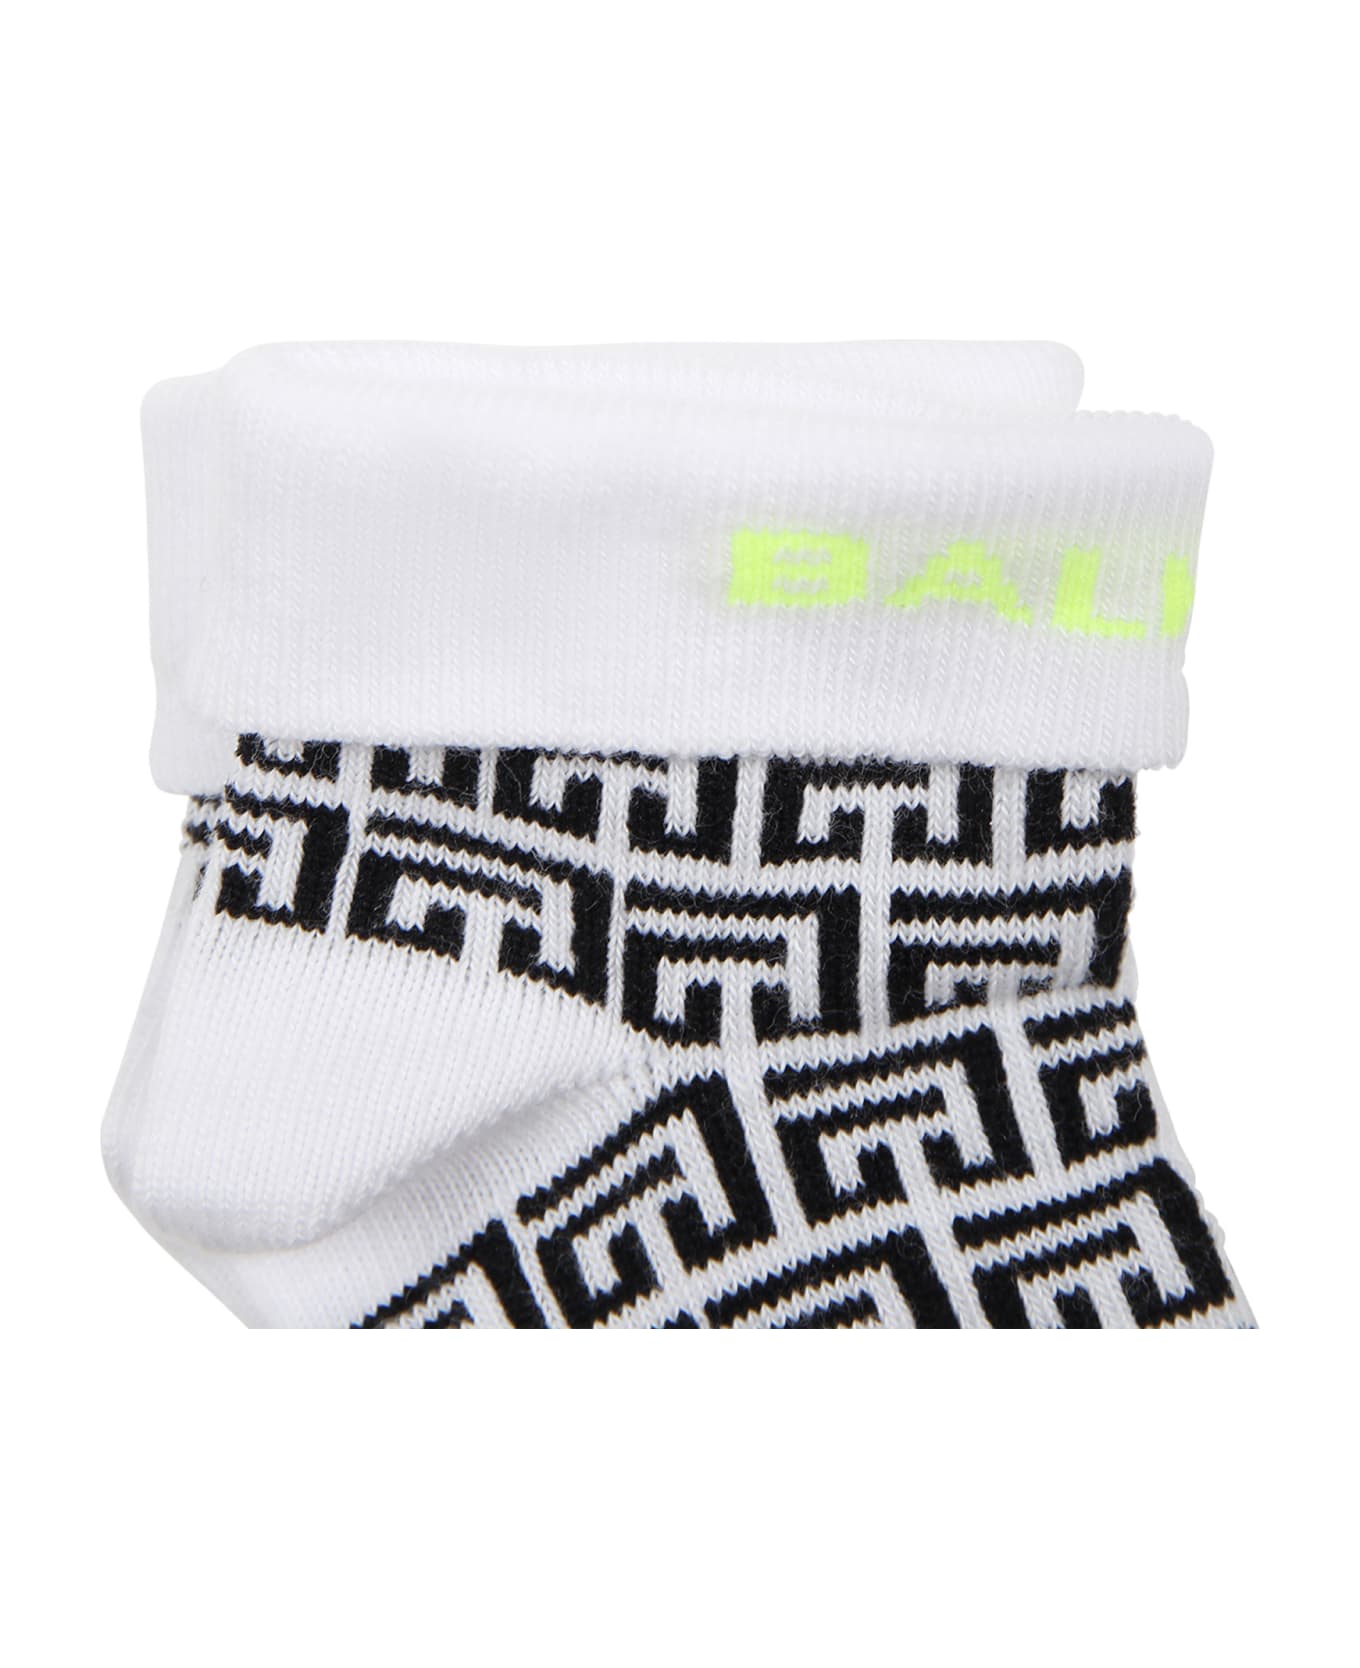 Balmain Multicolored Socks For Baby Girl With Logo - Multicolor シューズ